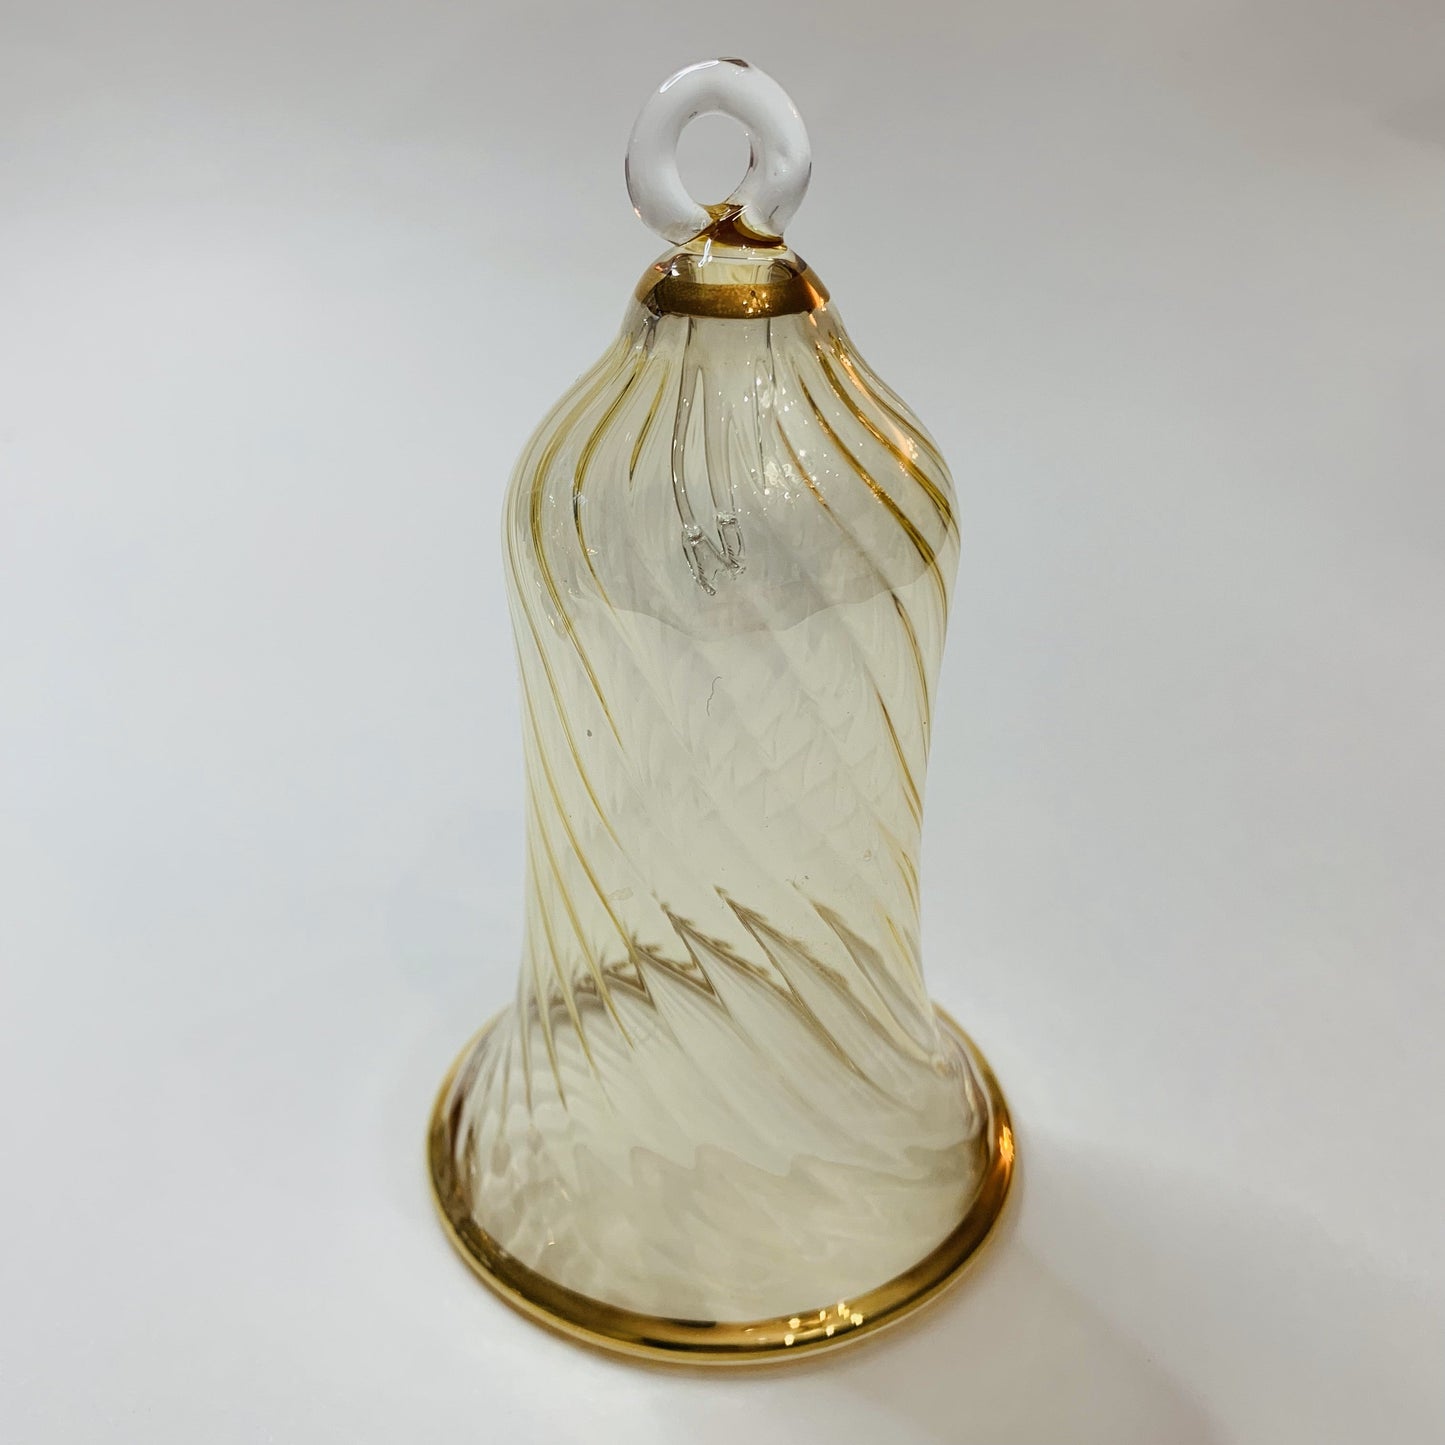 Blown Glass Ornament - Wavy Bell